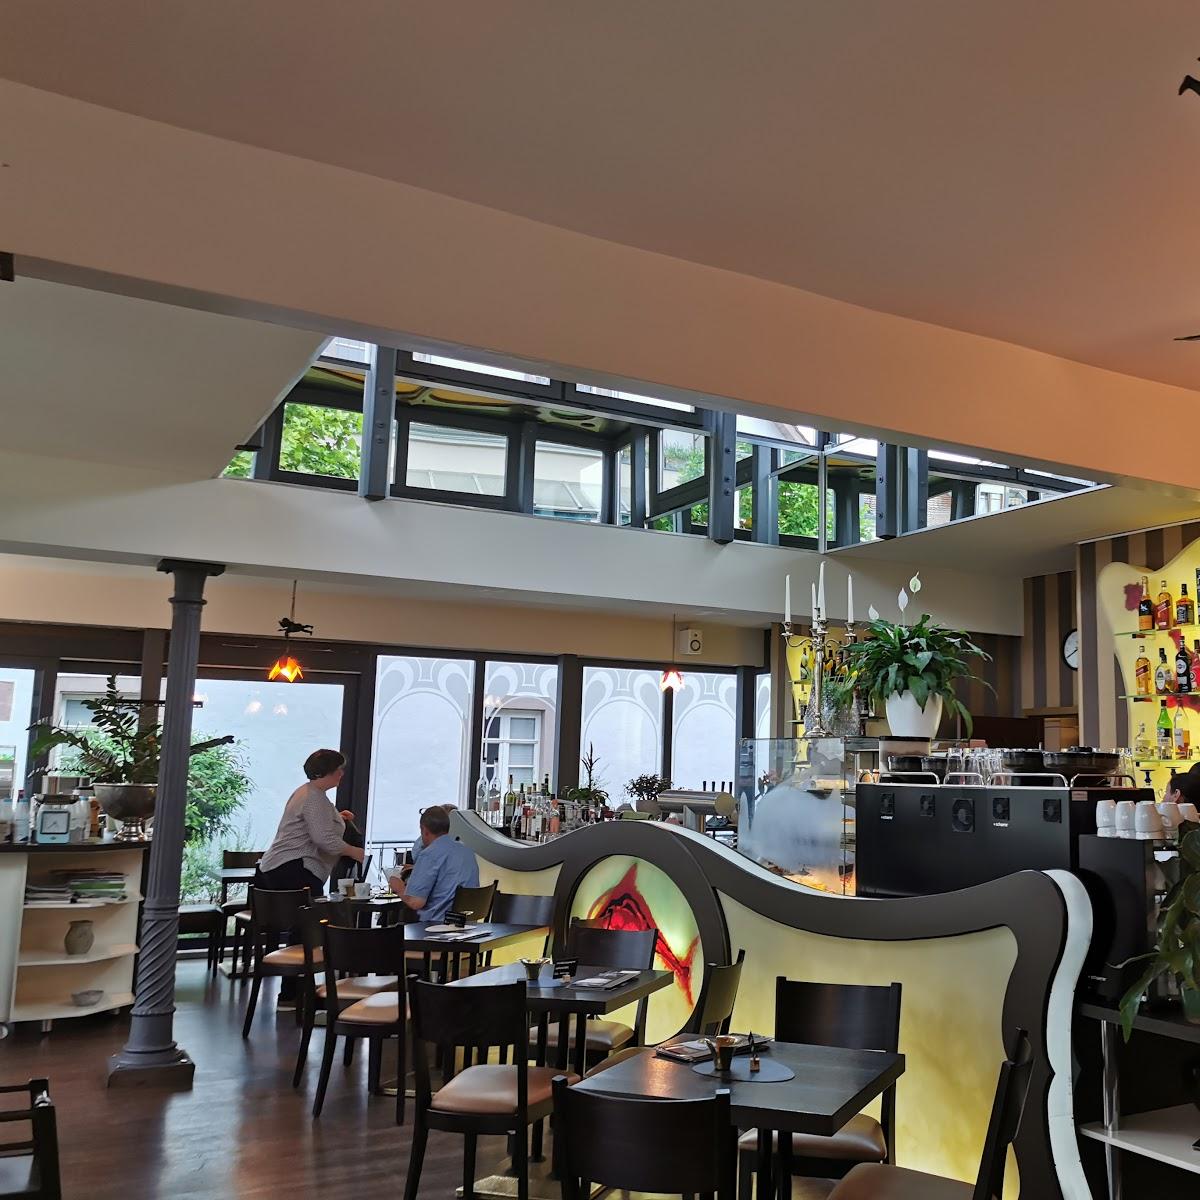 Restaurant "Pavillon  - Eisdiele, Lounge & Restaurant" in Herbolzheim